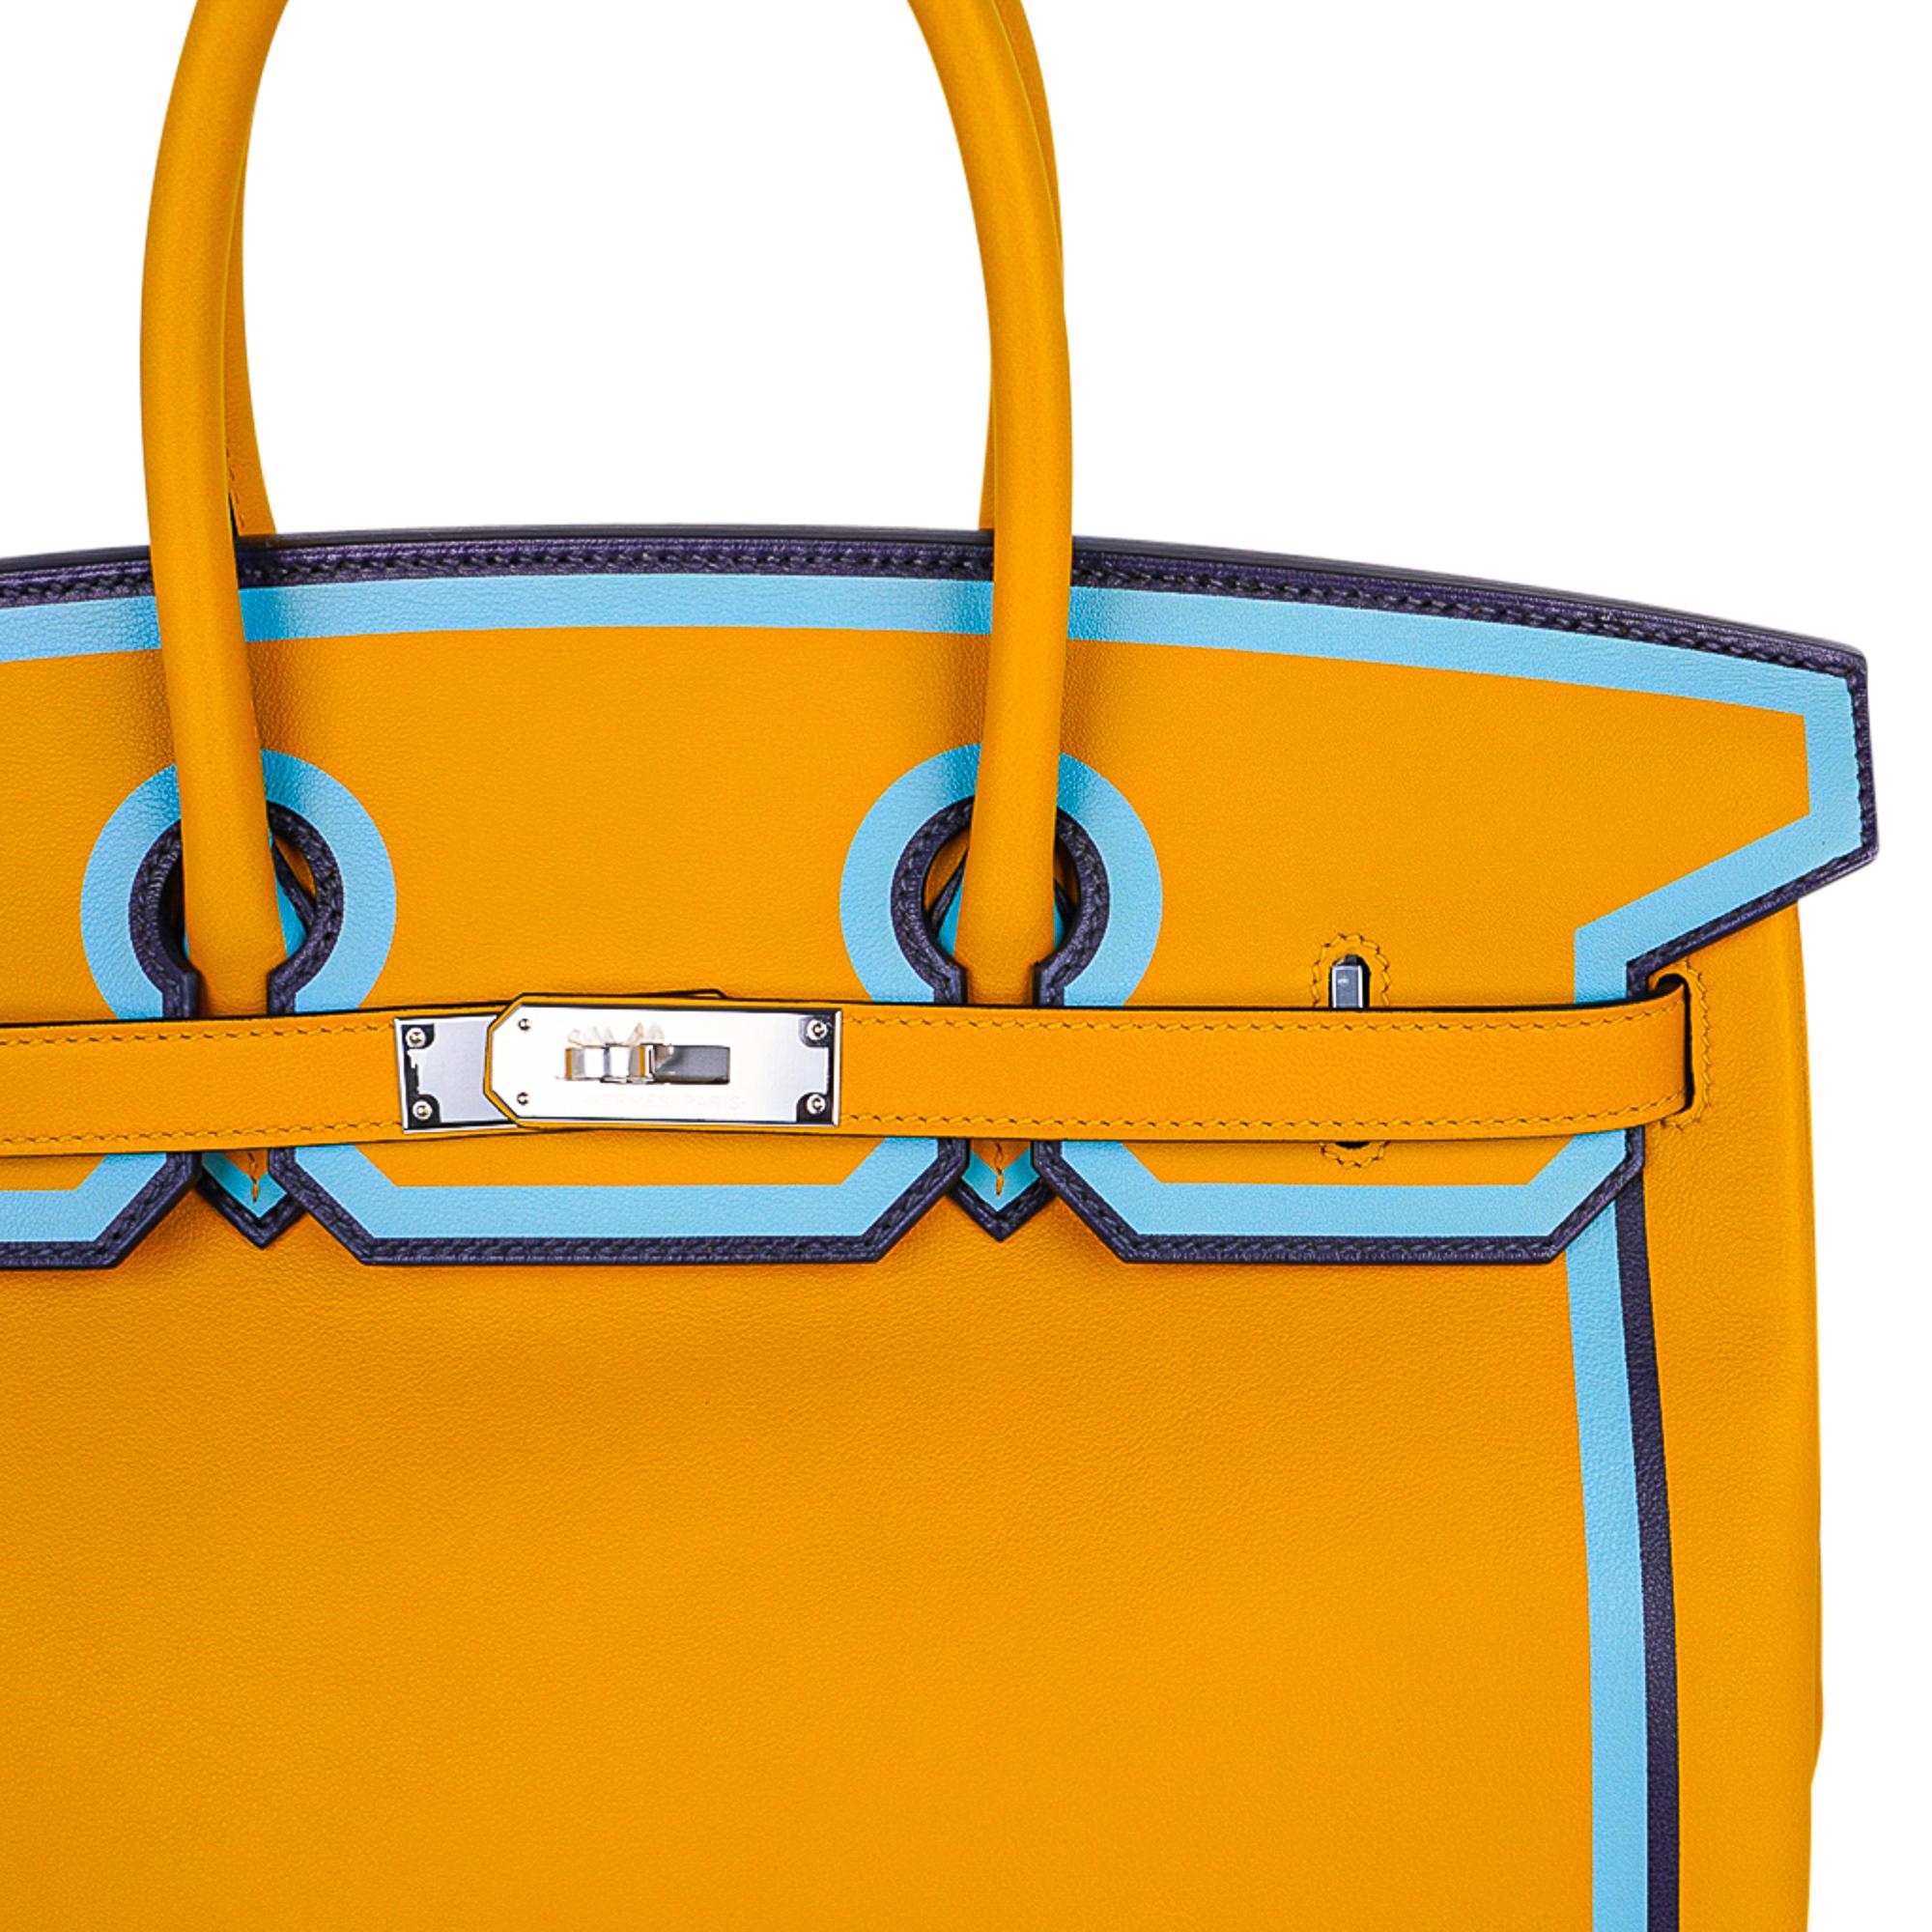  Hermes Birkin 35 Bag Jaune Ambre Blue Indigo Blue Celeste Limited Edition New Pour femmes 